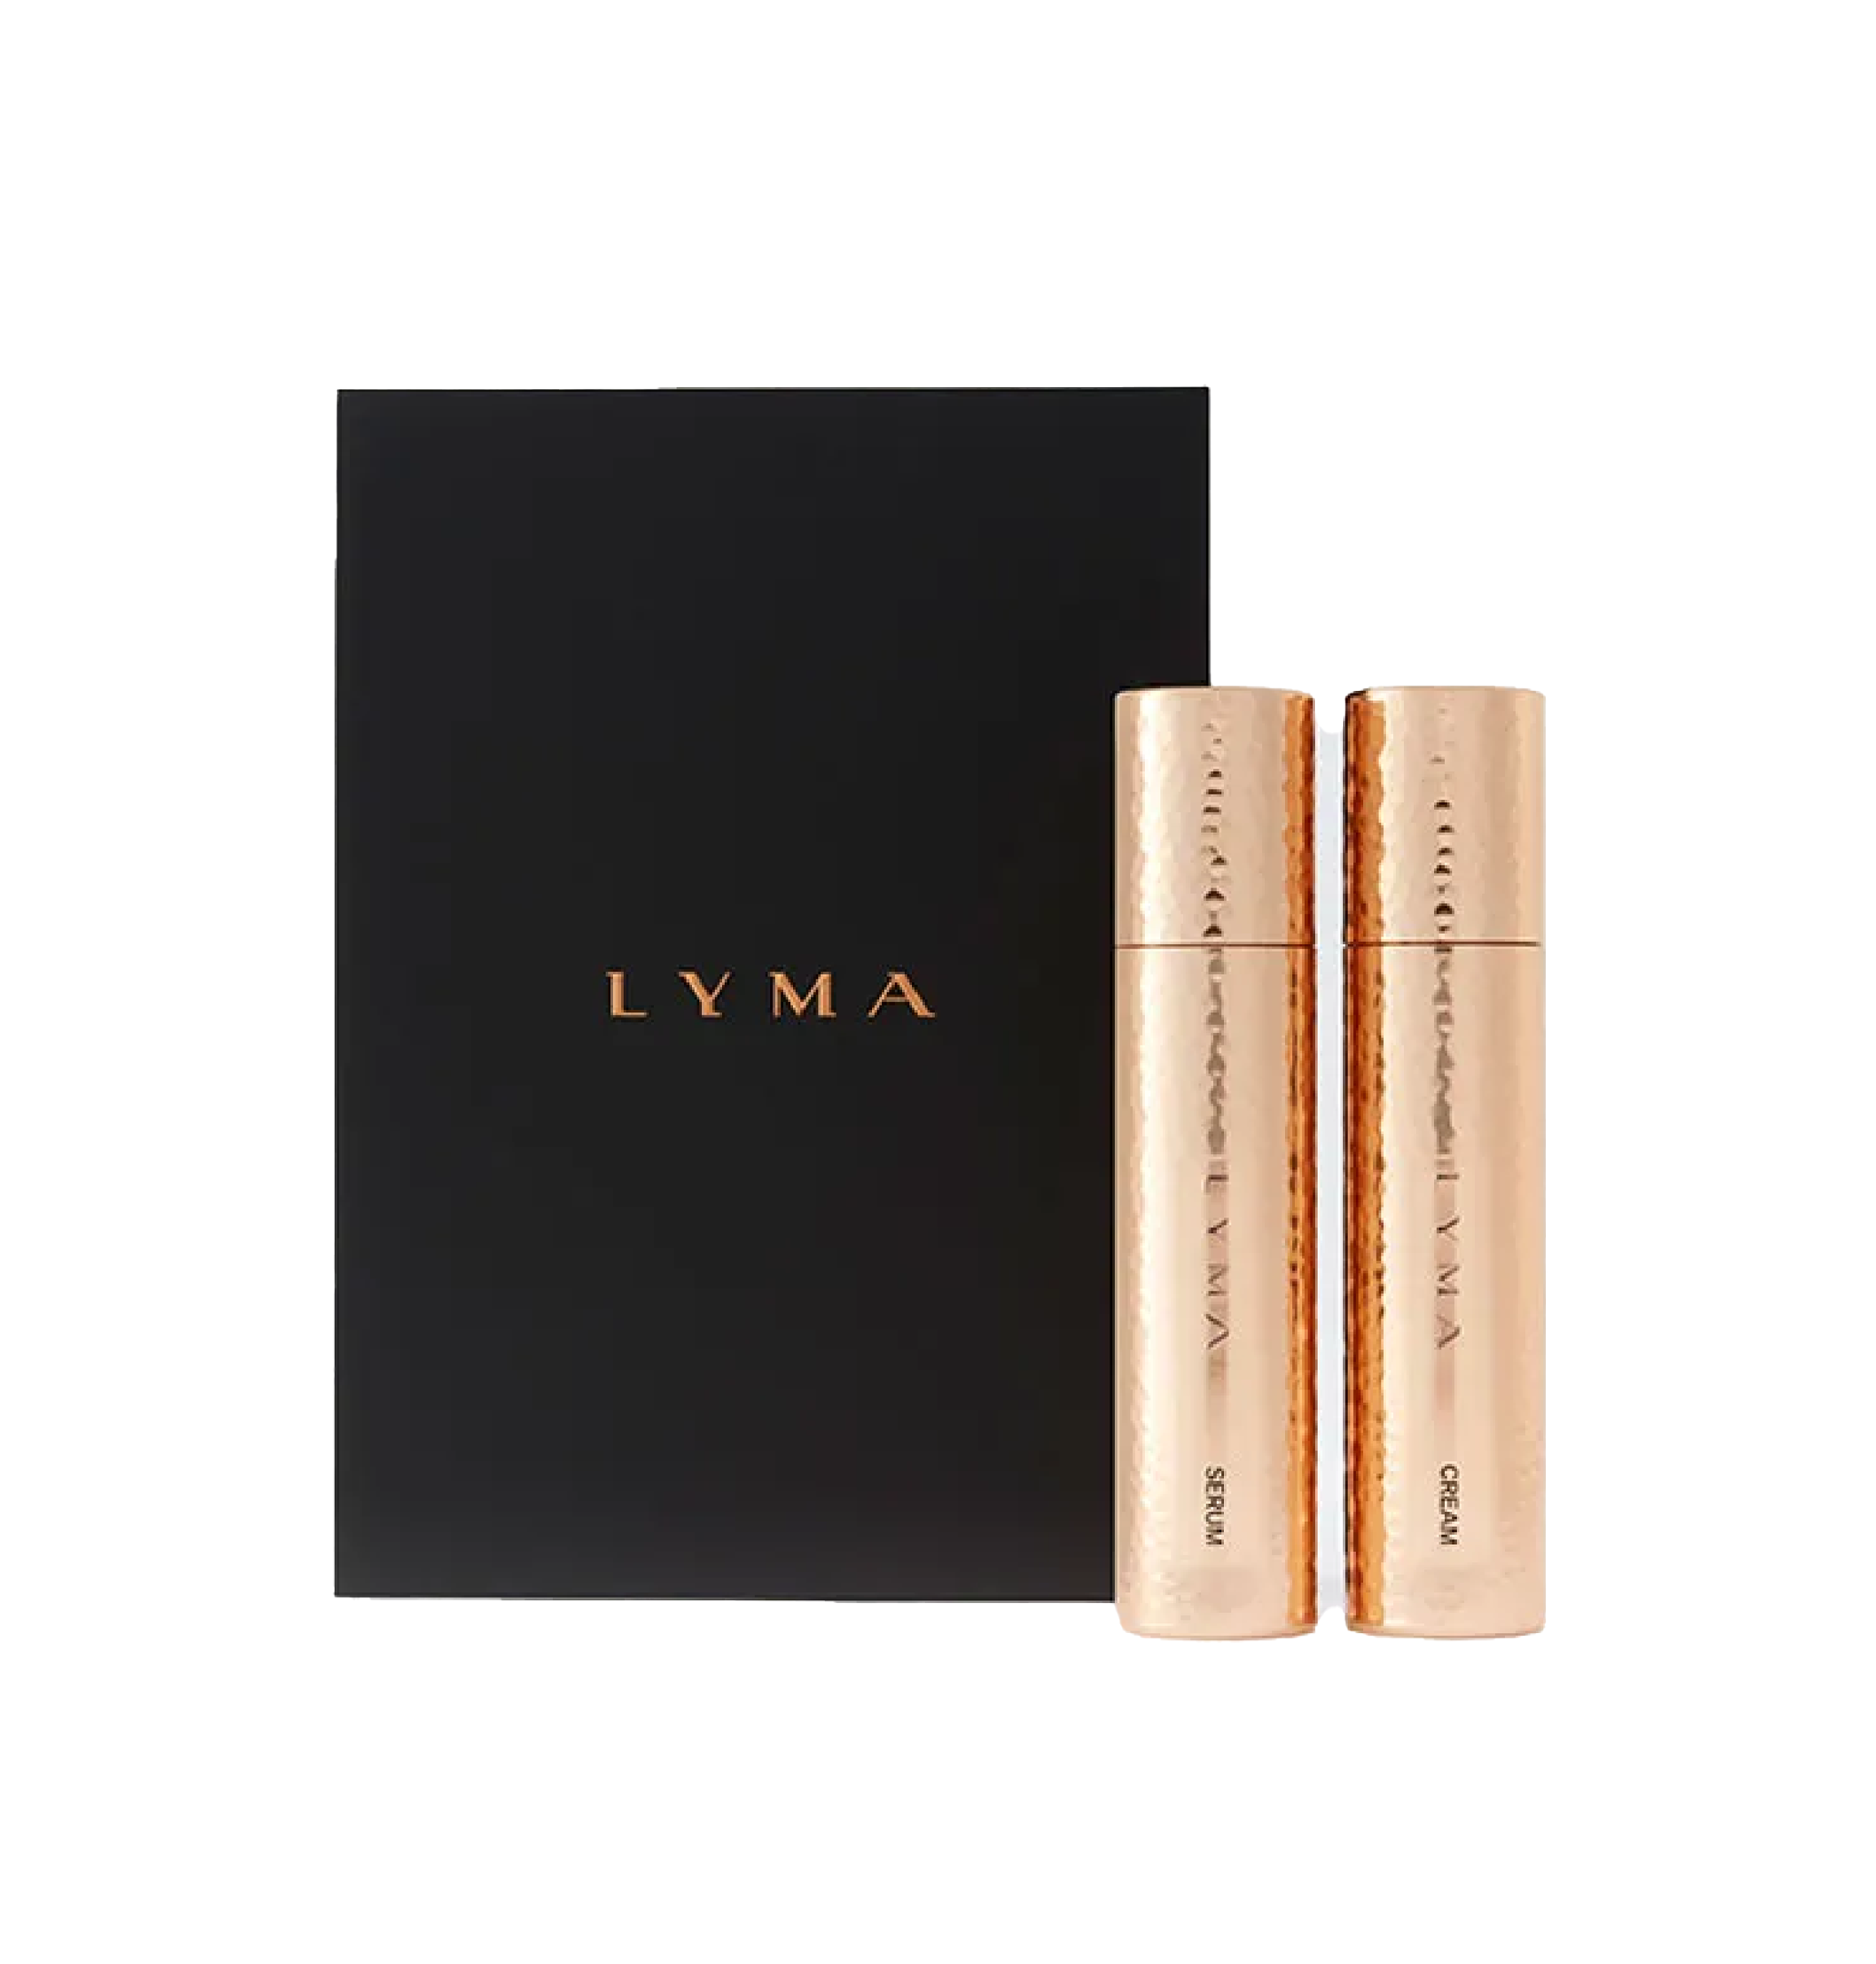 Lyma Skincare Serum & Cream Starter Kit